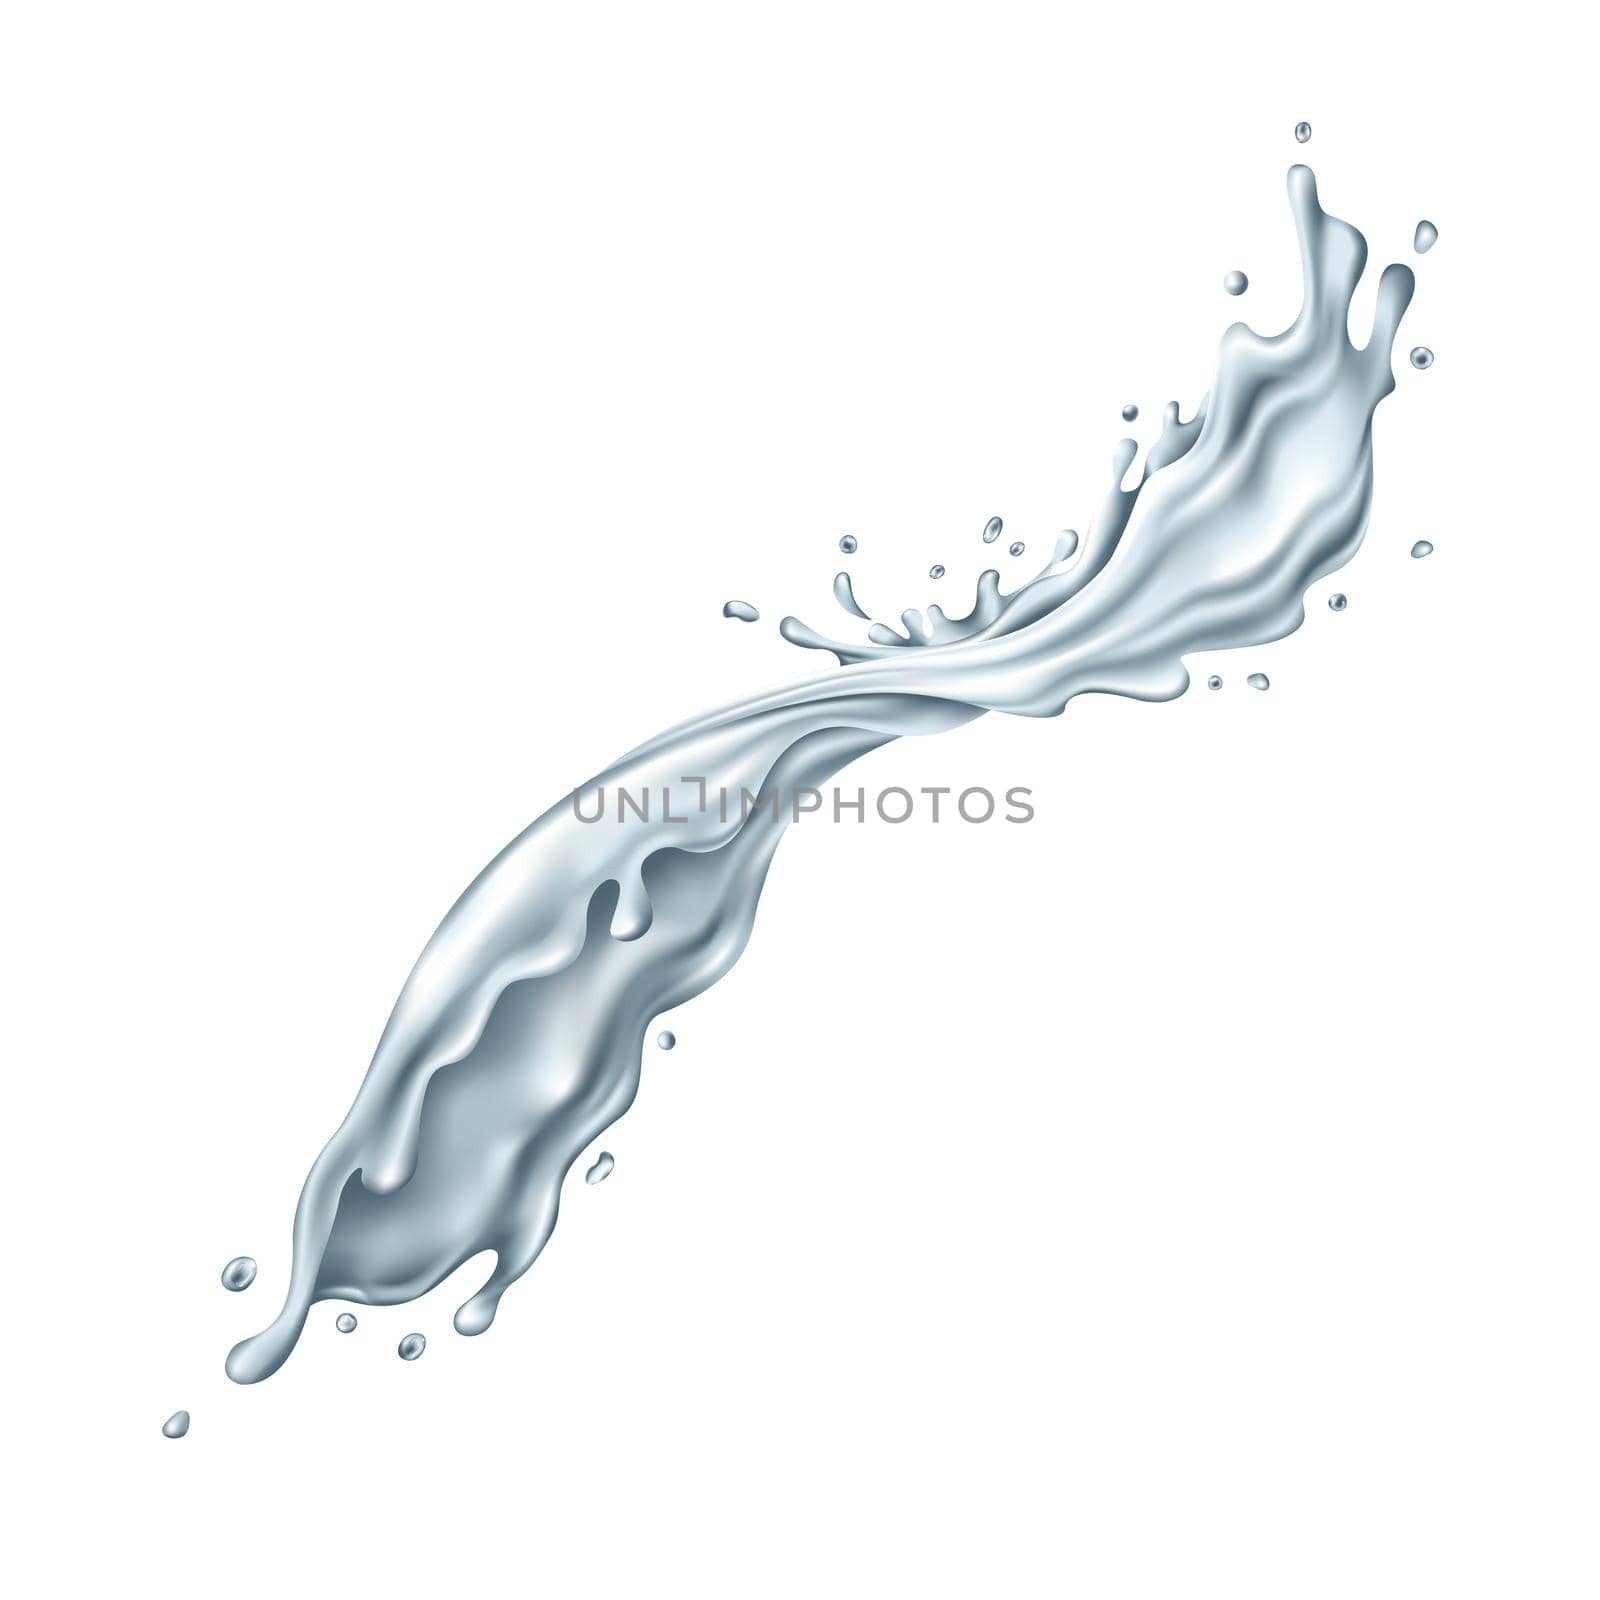 Clear water dynamic splash. Illustration in realistic style.